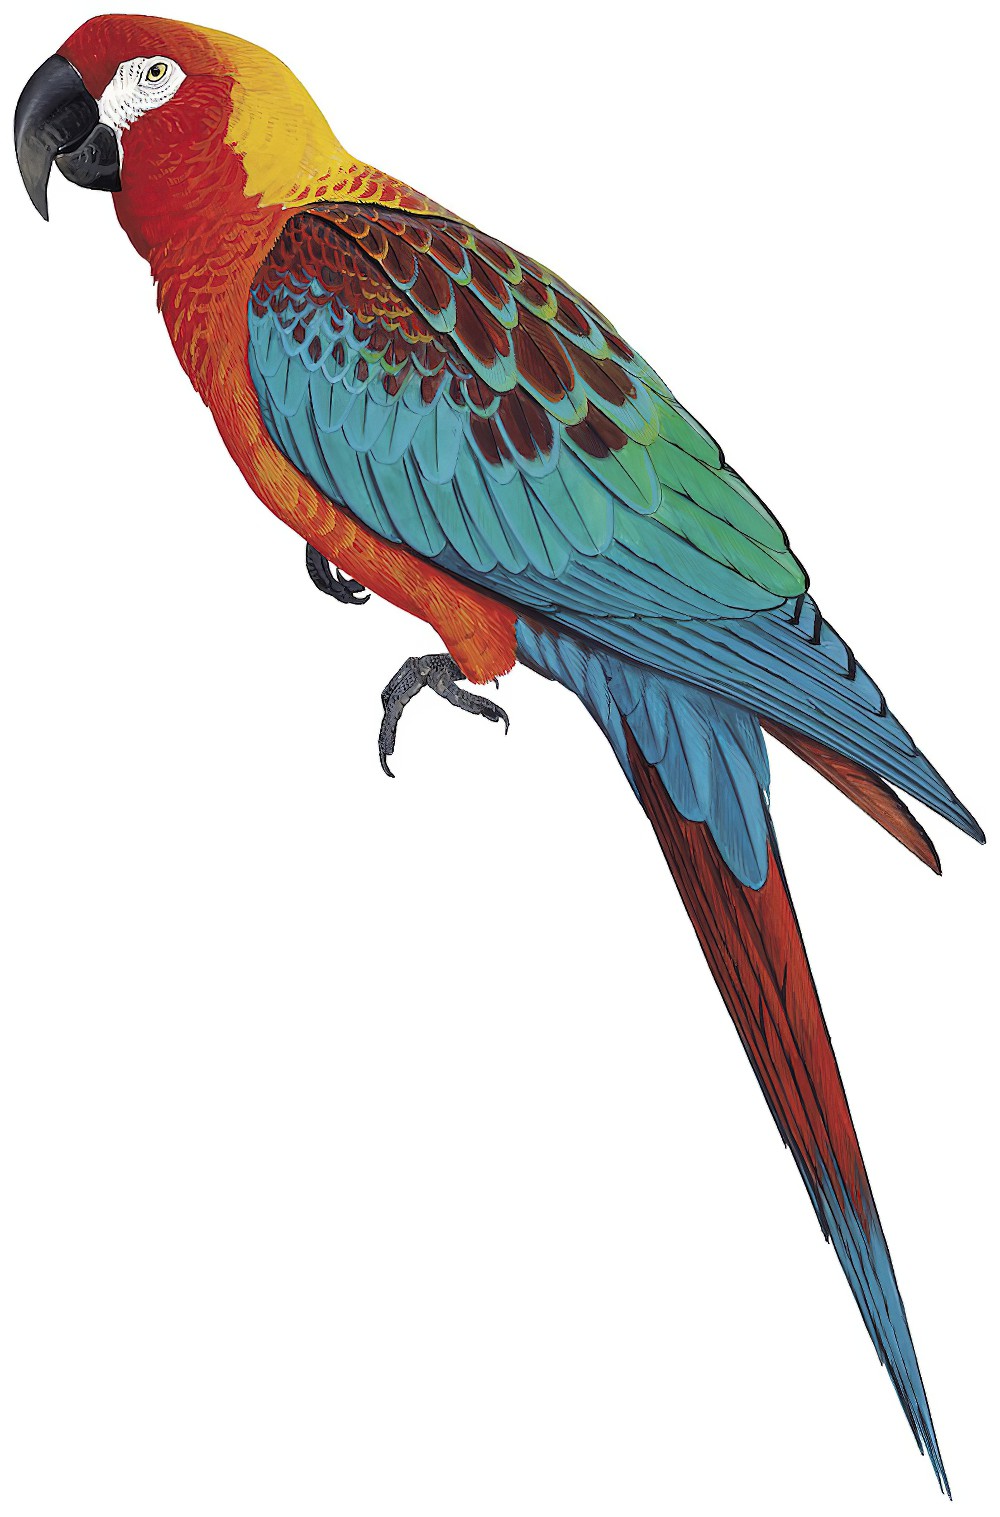 Cuban Macaw / Ara tricolor